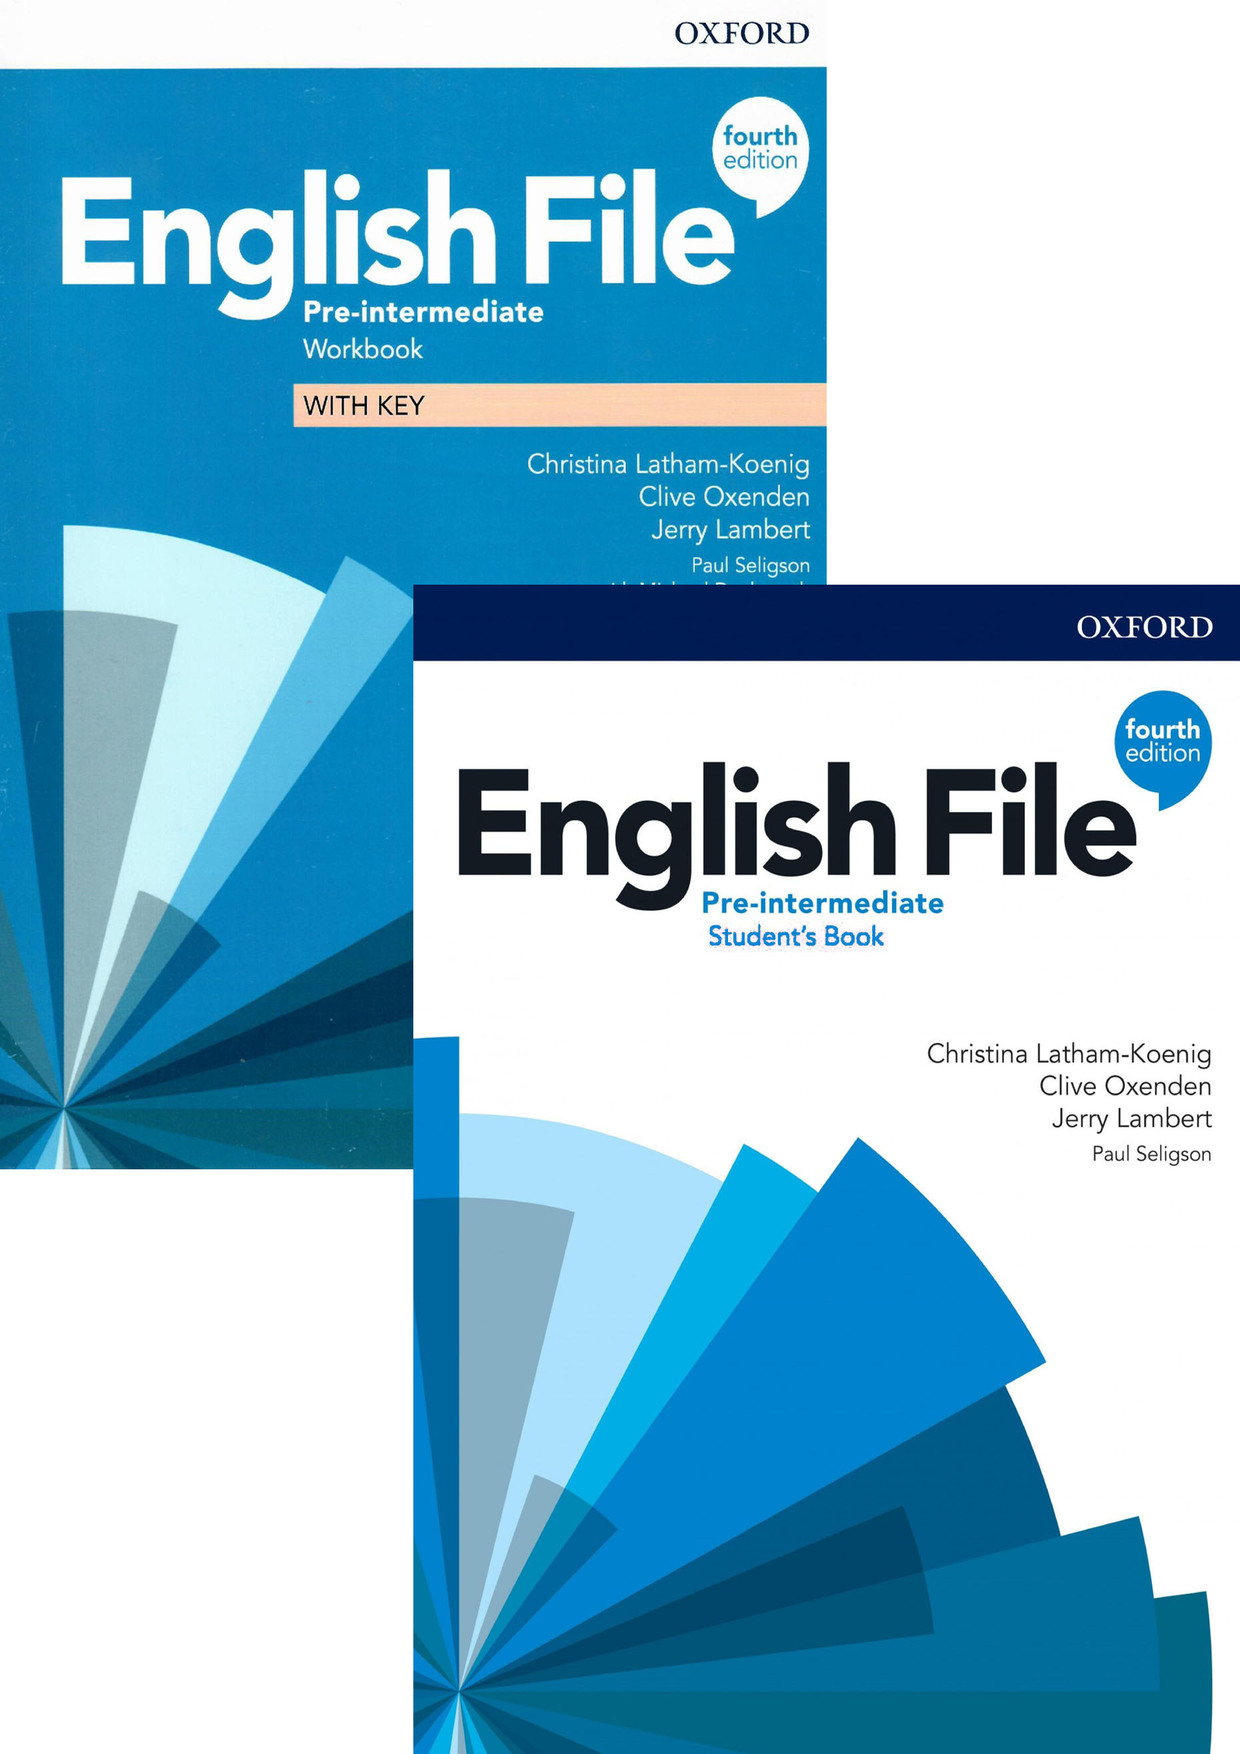 Инглиш файл интермедиат. EF pre Intermediate 4th Edition. English file Elementary 4th Edition уровень. English file pre Intermediate 4th Edition. English file Intermediate 4th Edition.